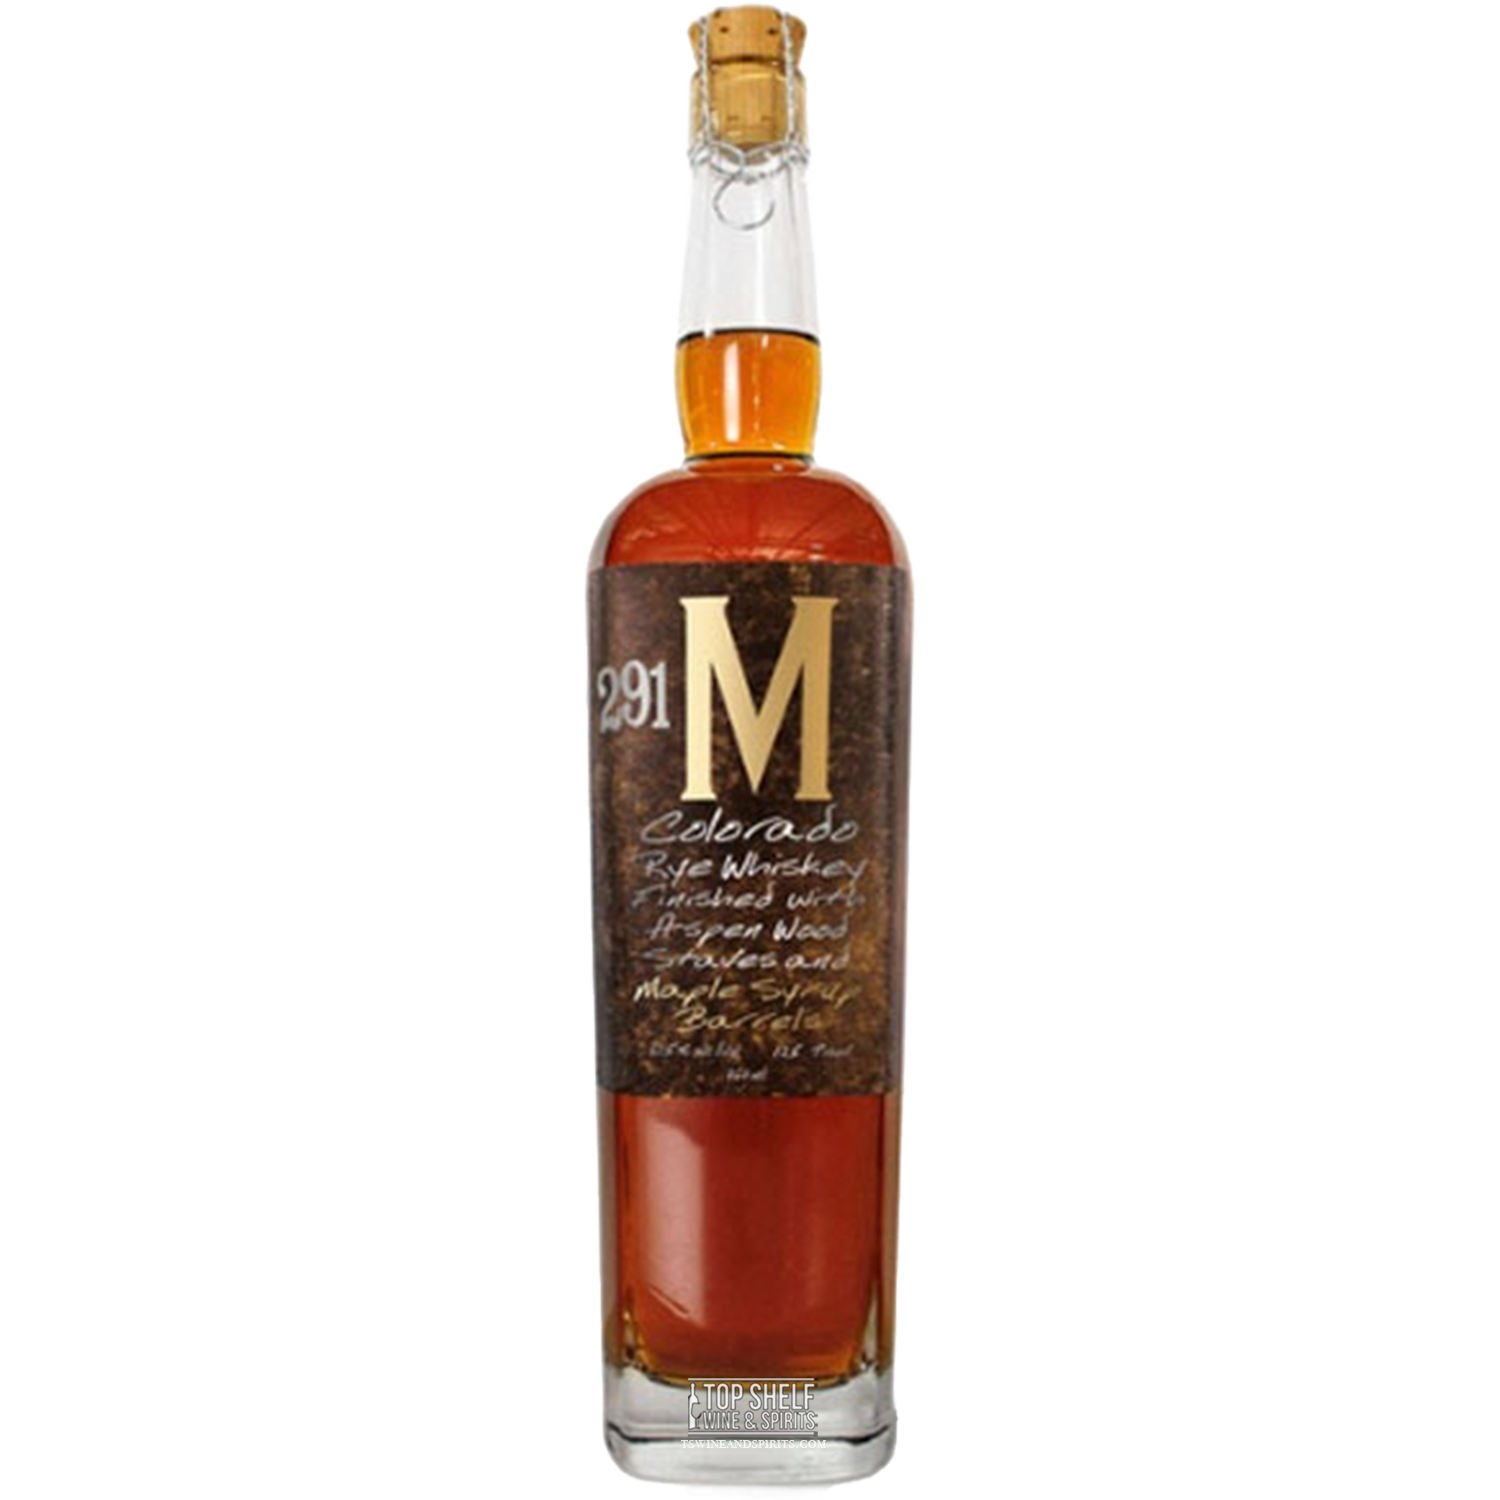 291 Colorado "The M" Rye Whiskey